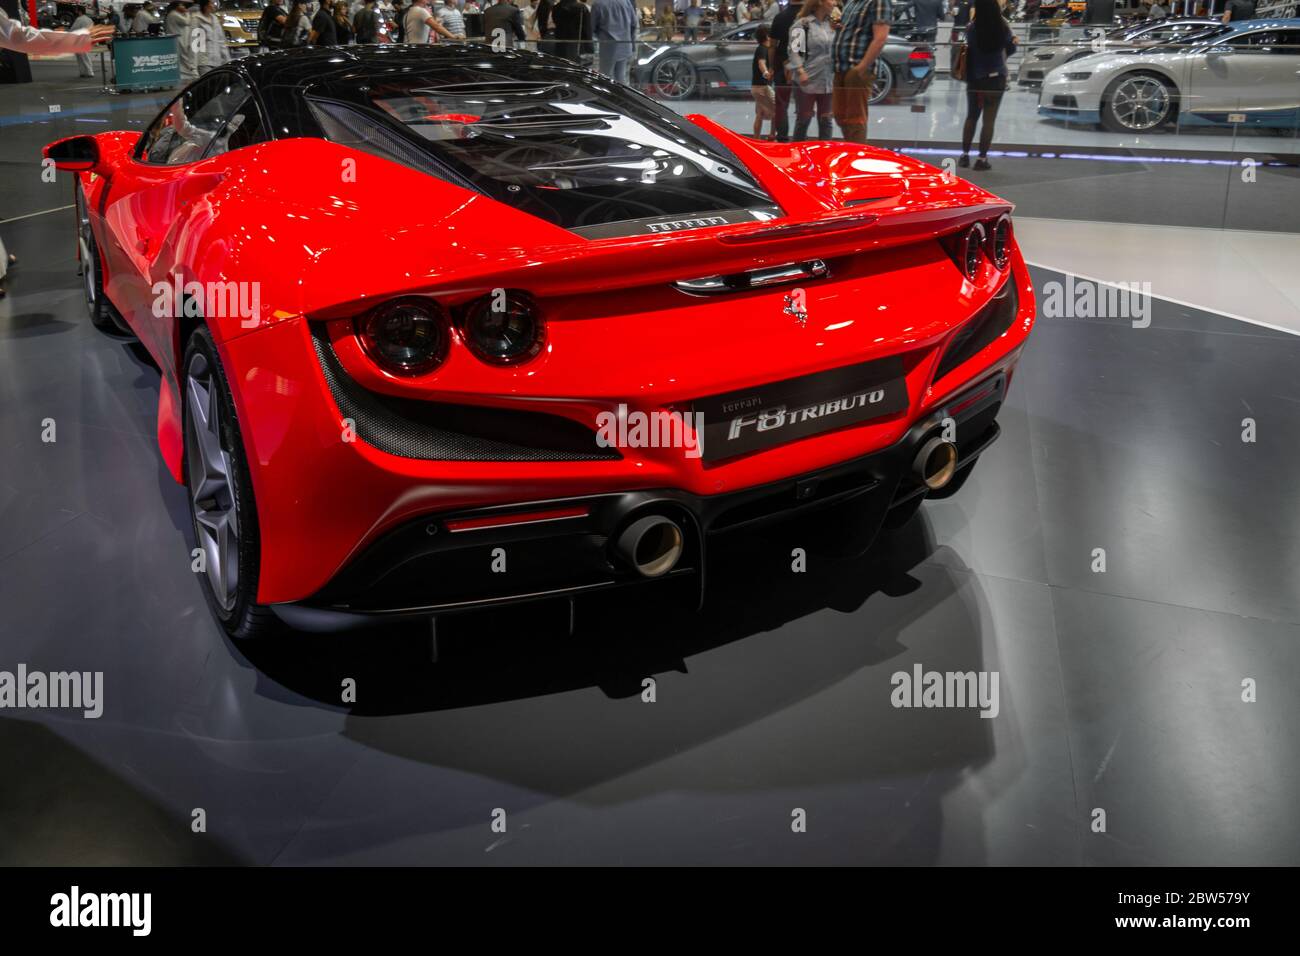 Epic Red Ferrari - brandneuer Ferrari F8 Tributo, Mittelmotor hinten Antrieb Sportwagen Stockfoto